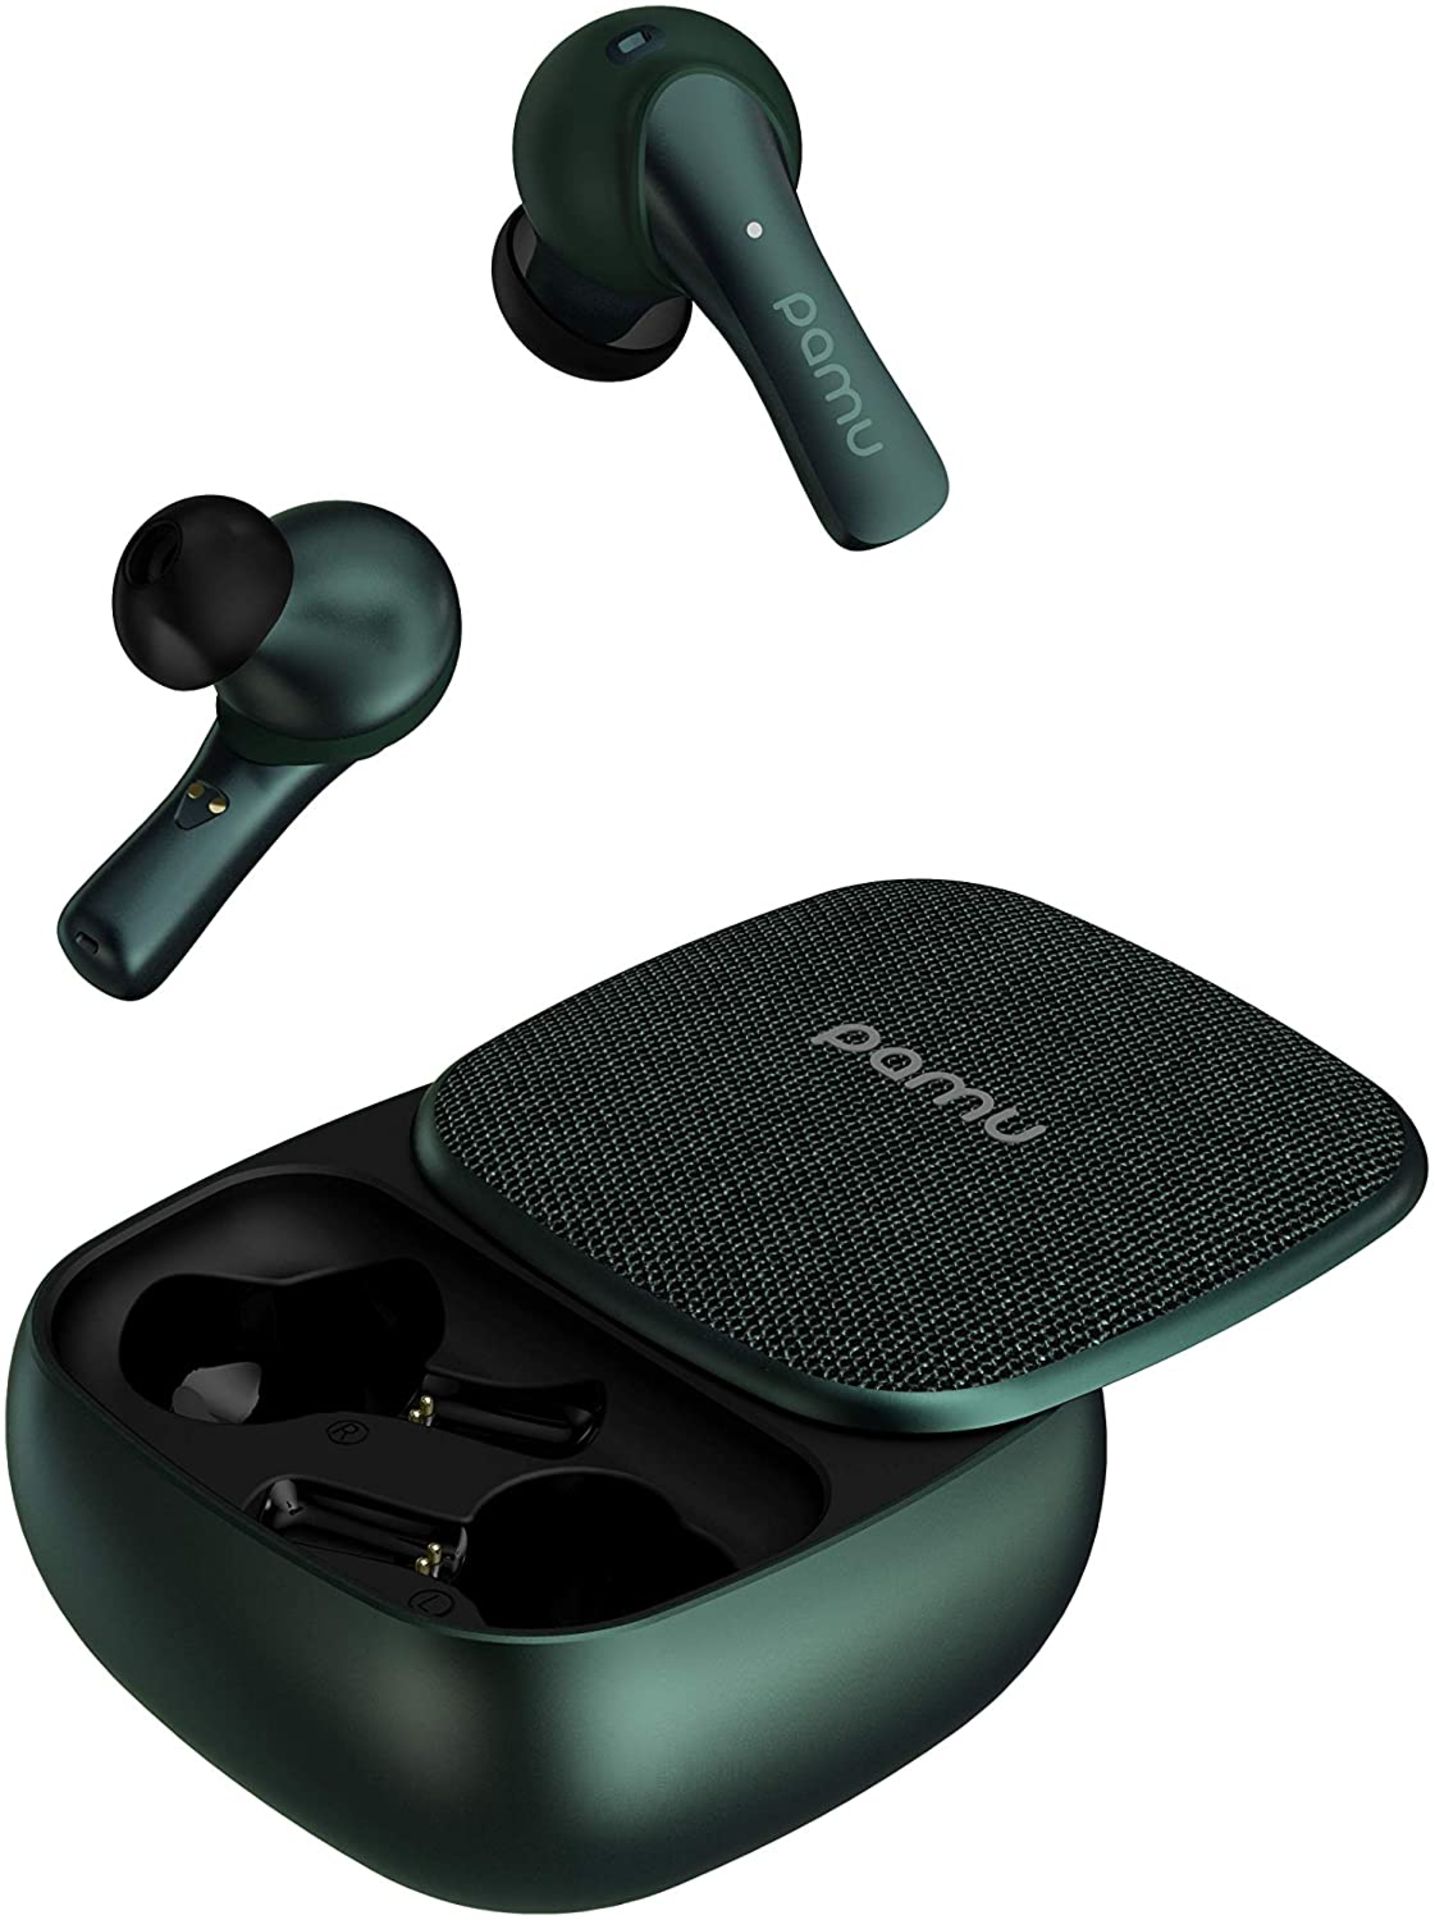 Padmate Pamu Slide True Wireless Stereo Bluetooth Earphones - Green RRP £102.99 - Image 4 of 4